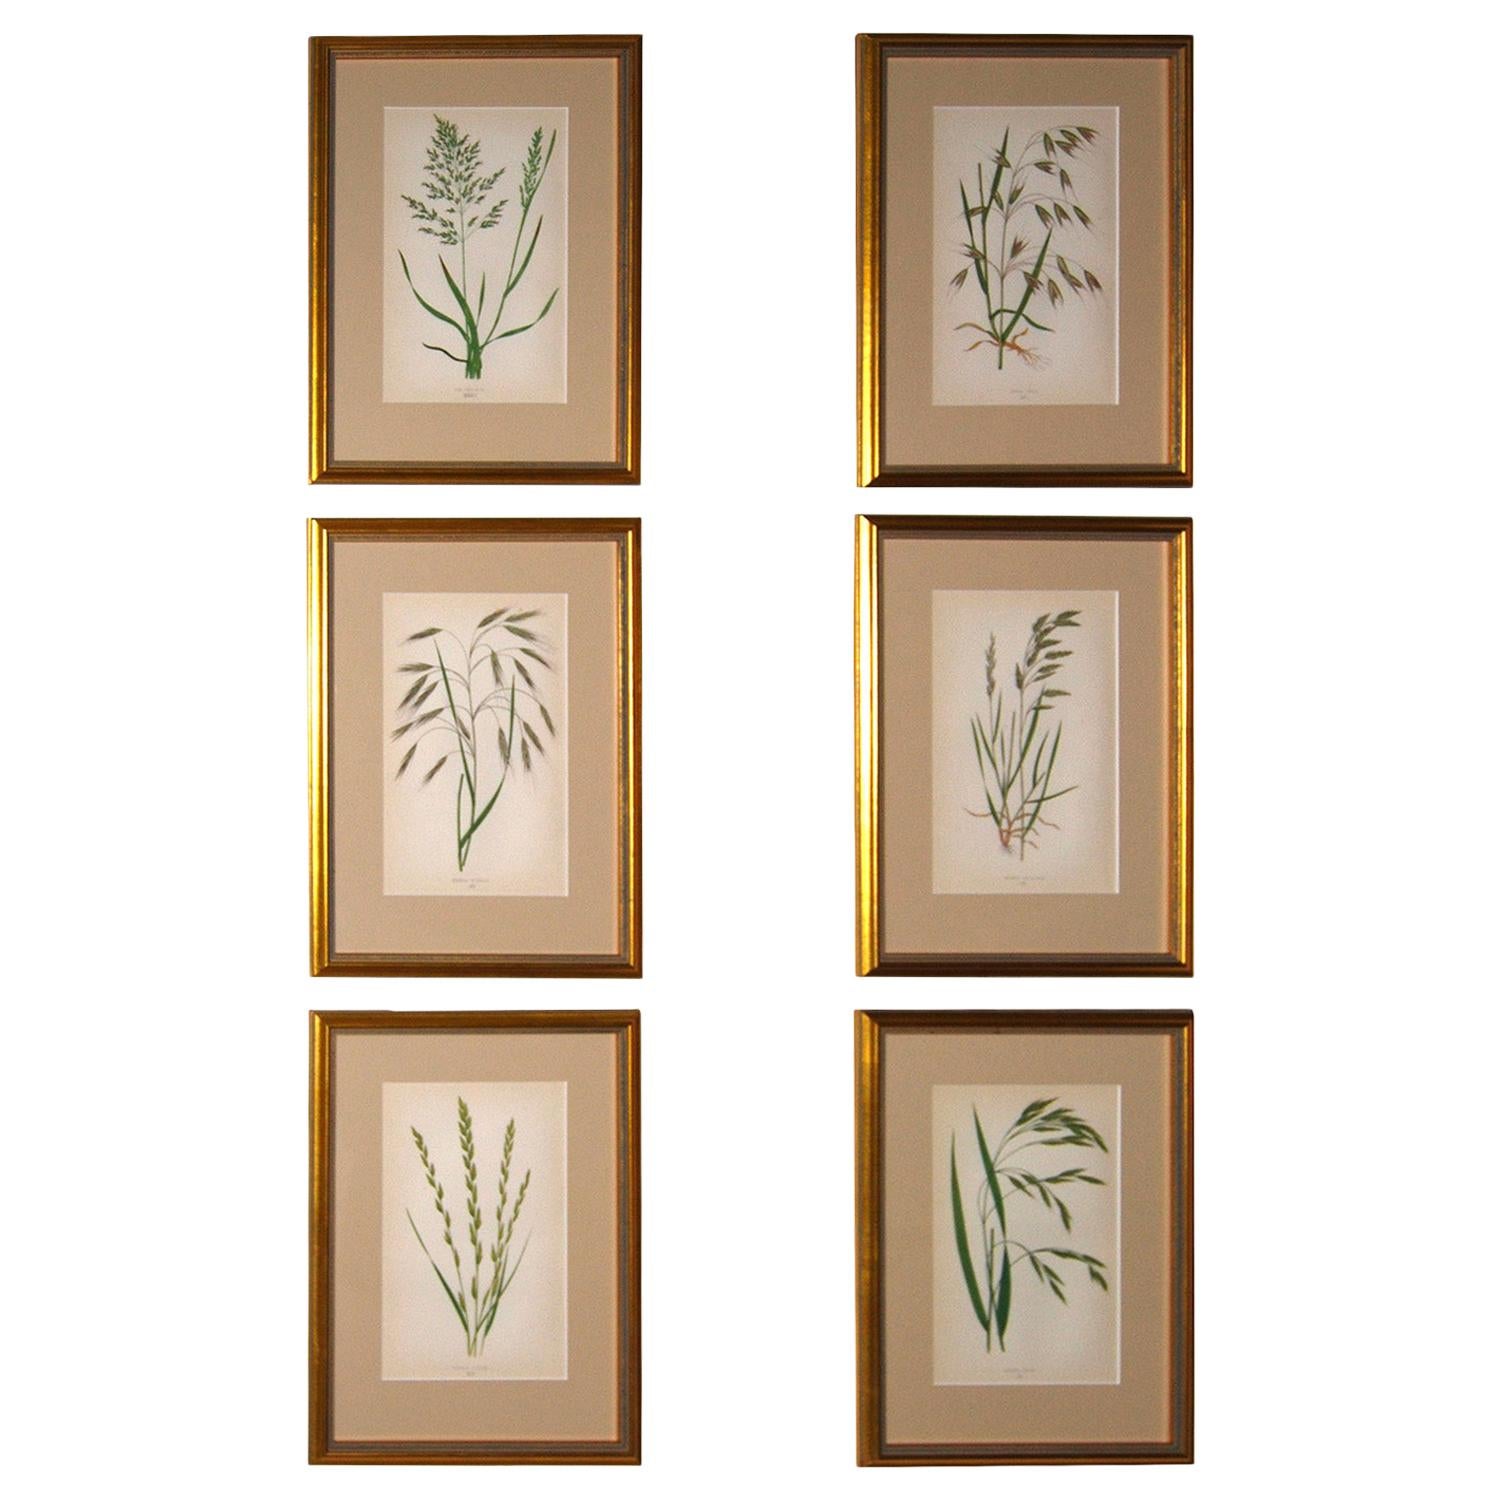 Set of 12 Handcolored Grasses Prints